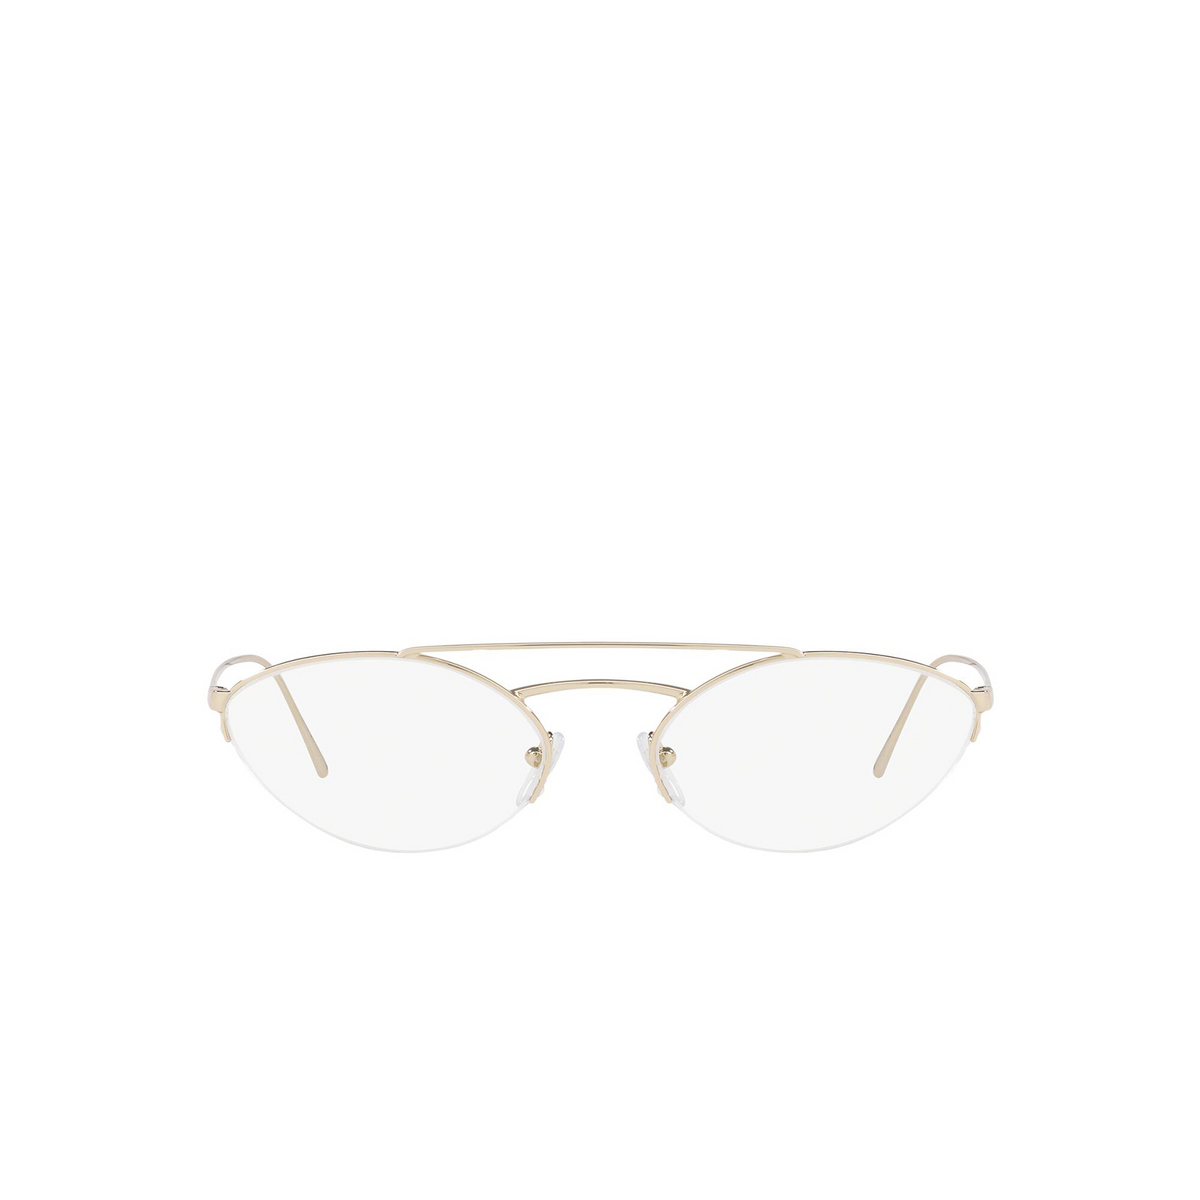 Prada® Oval Eyeglasses: Catwalk PR 62VV color Pale Gold ZVN1O1 - front view.